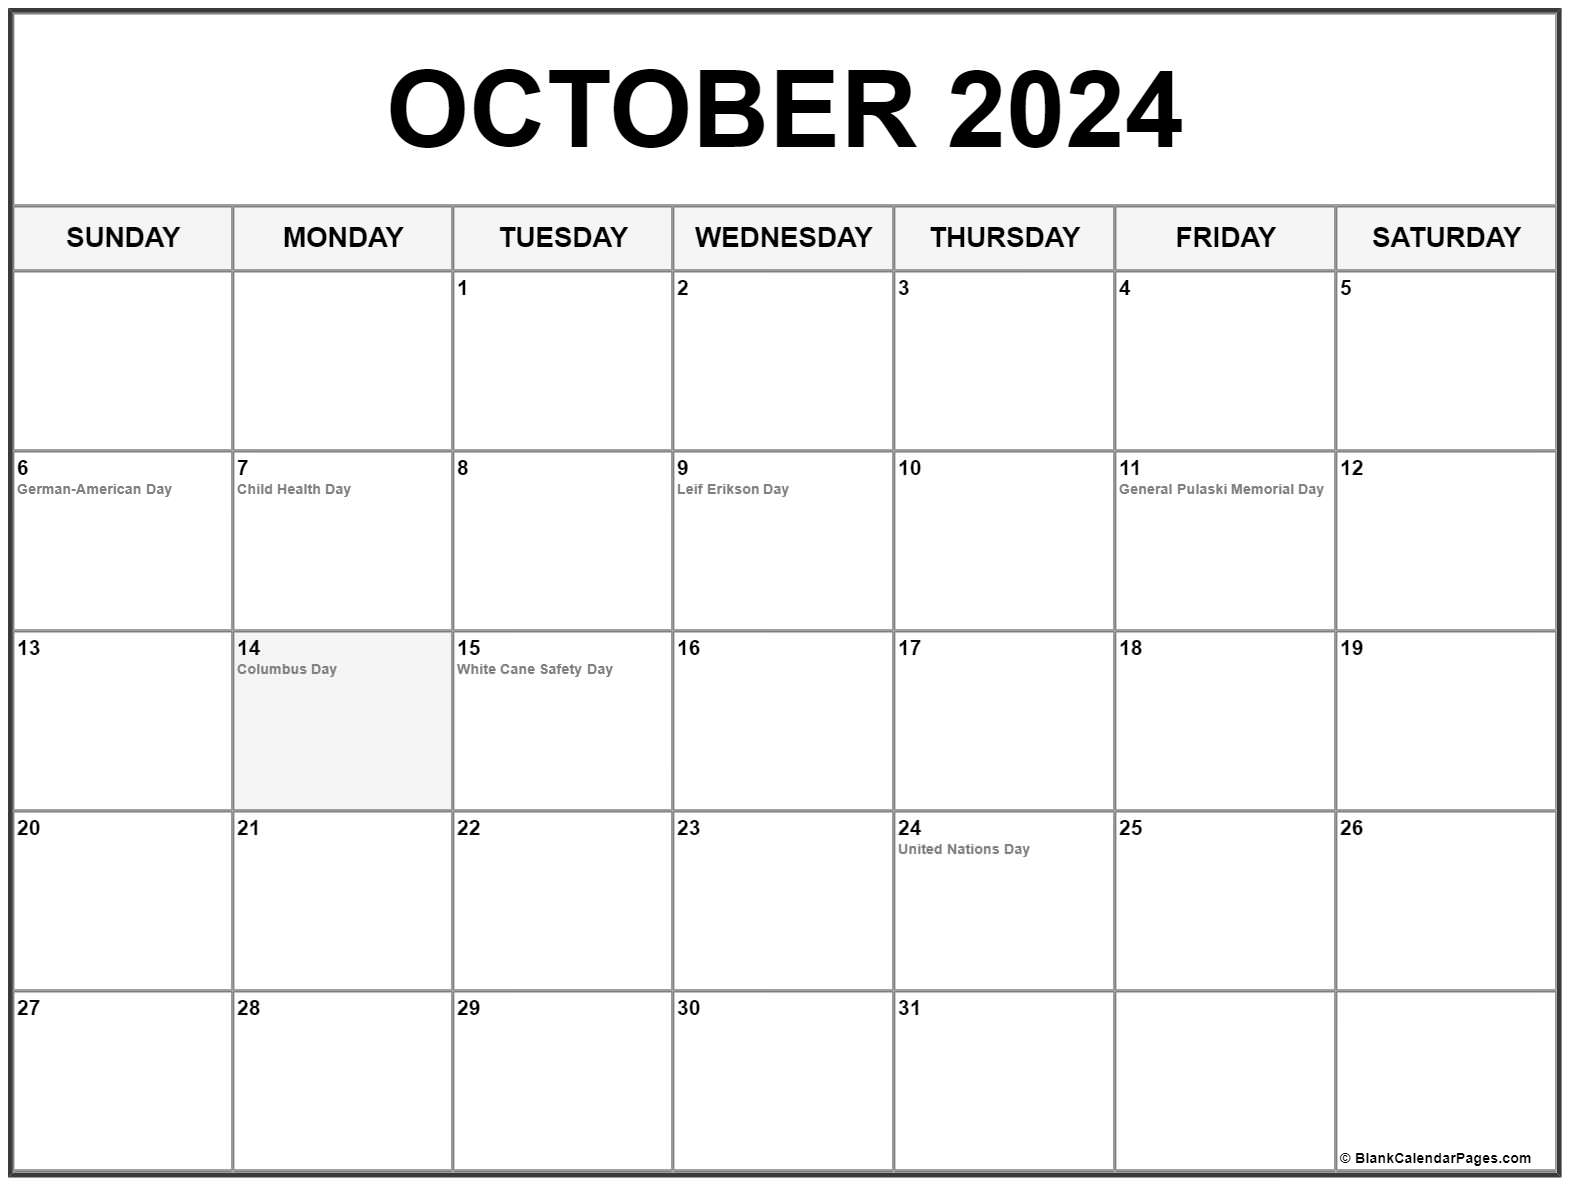 Oct 2022 Calendar October 2022 With Holidays Calendar